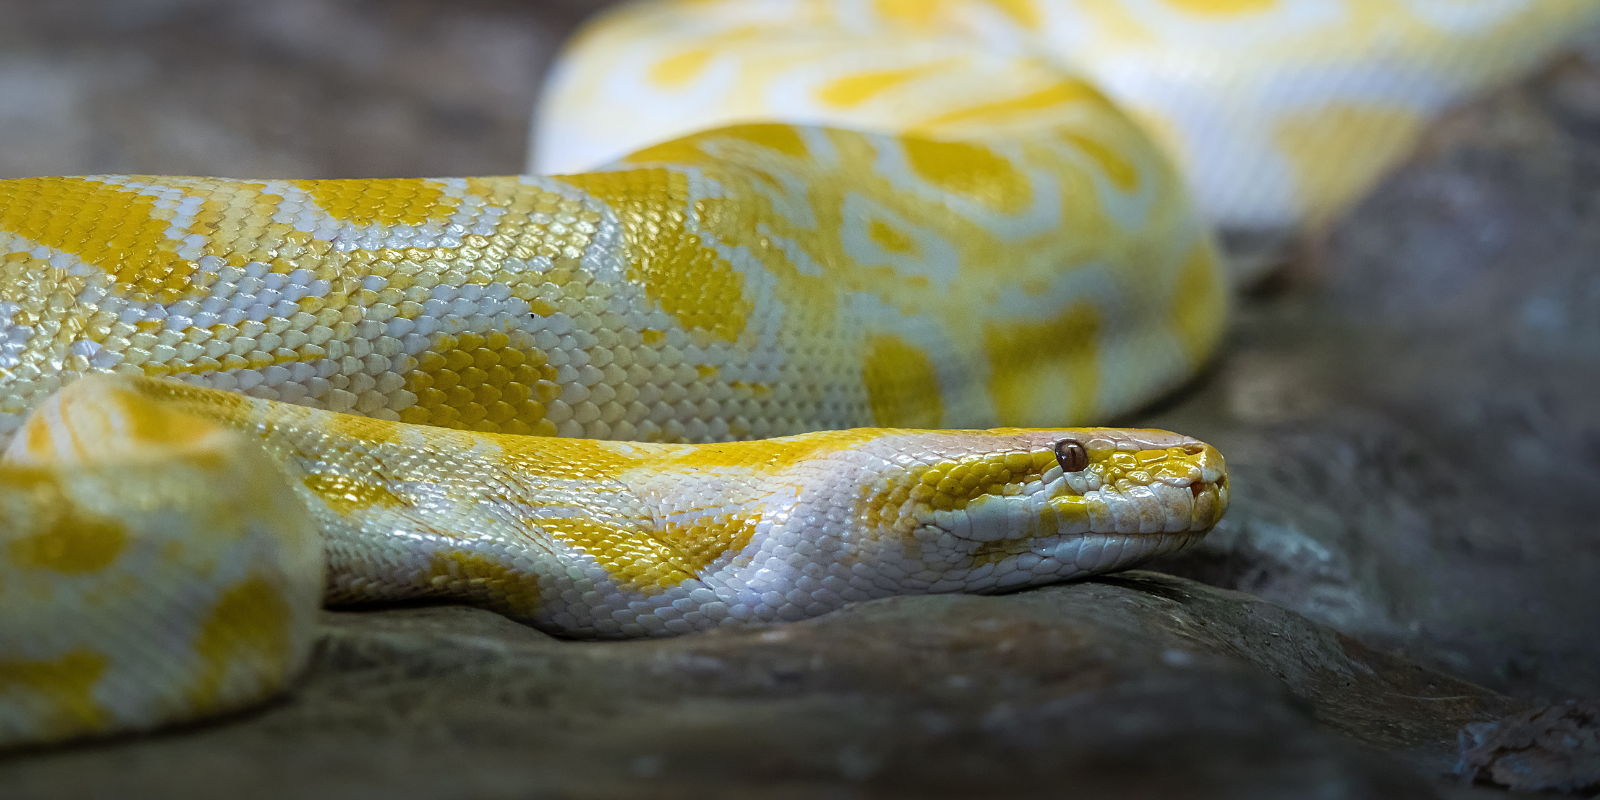 A photo of a Burmese python